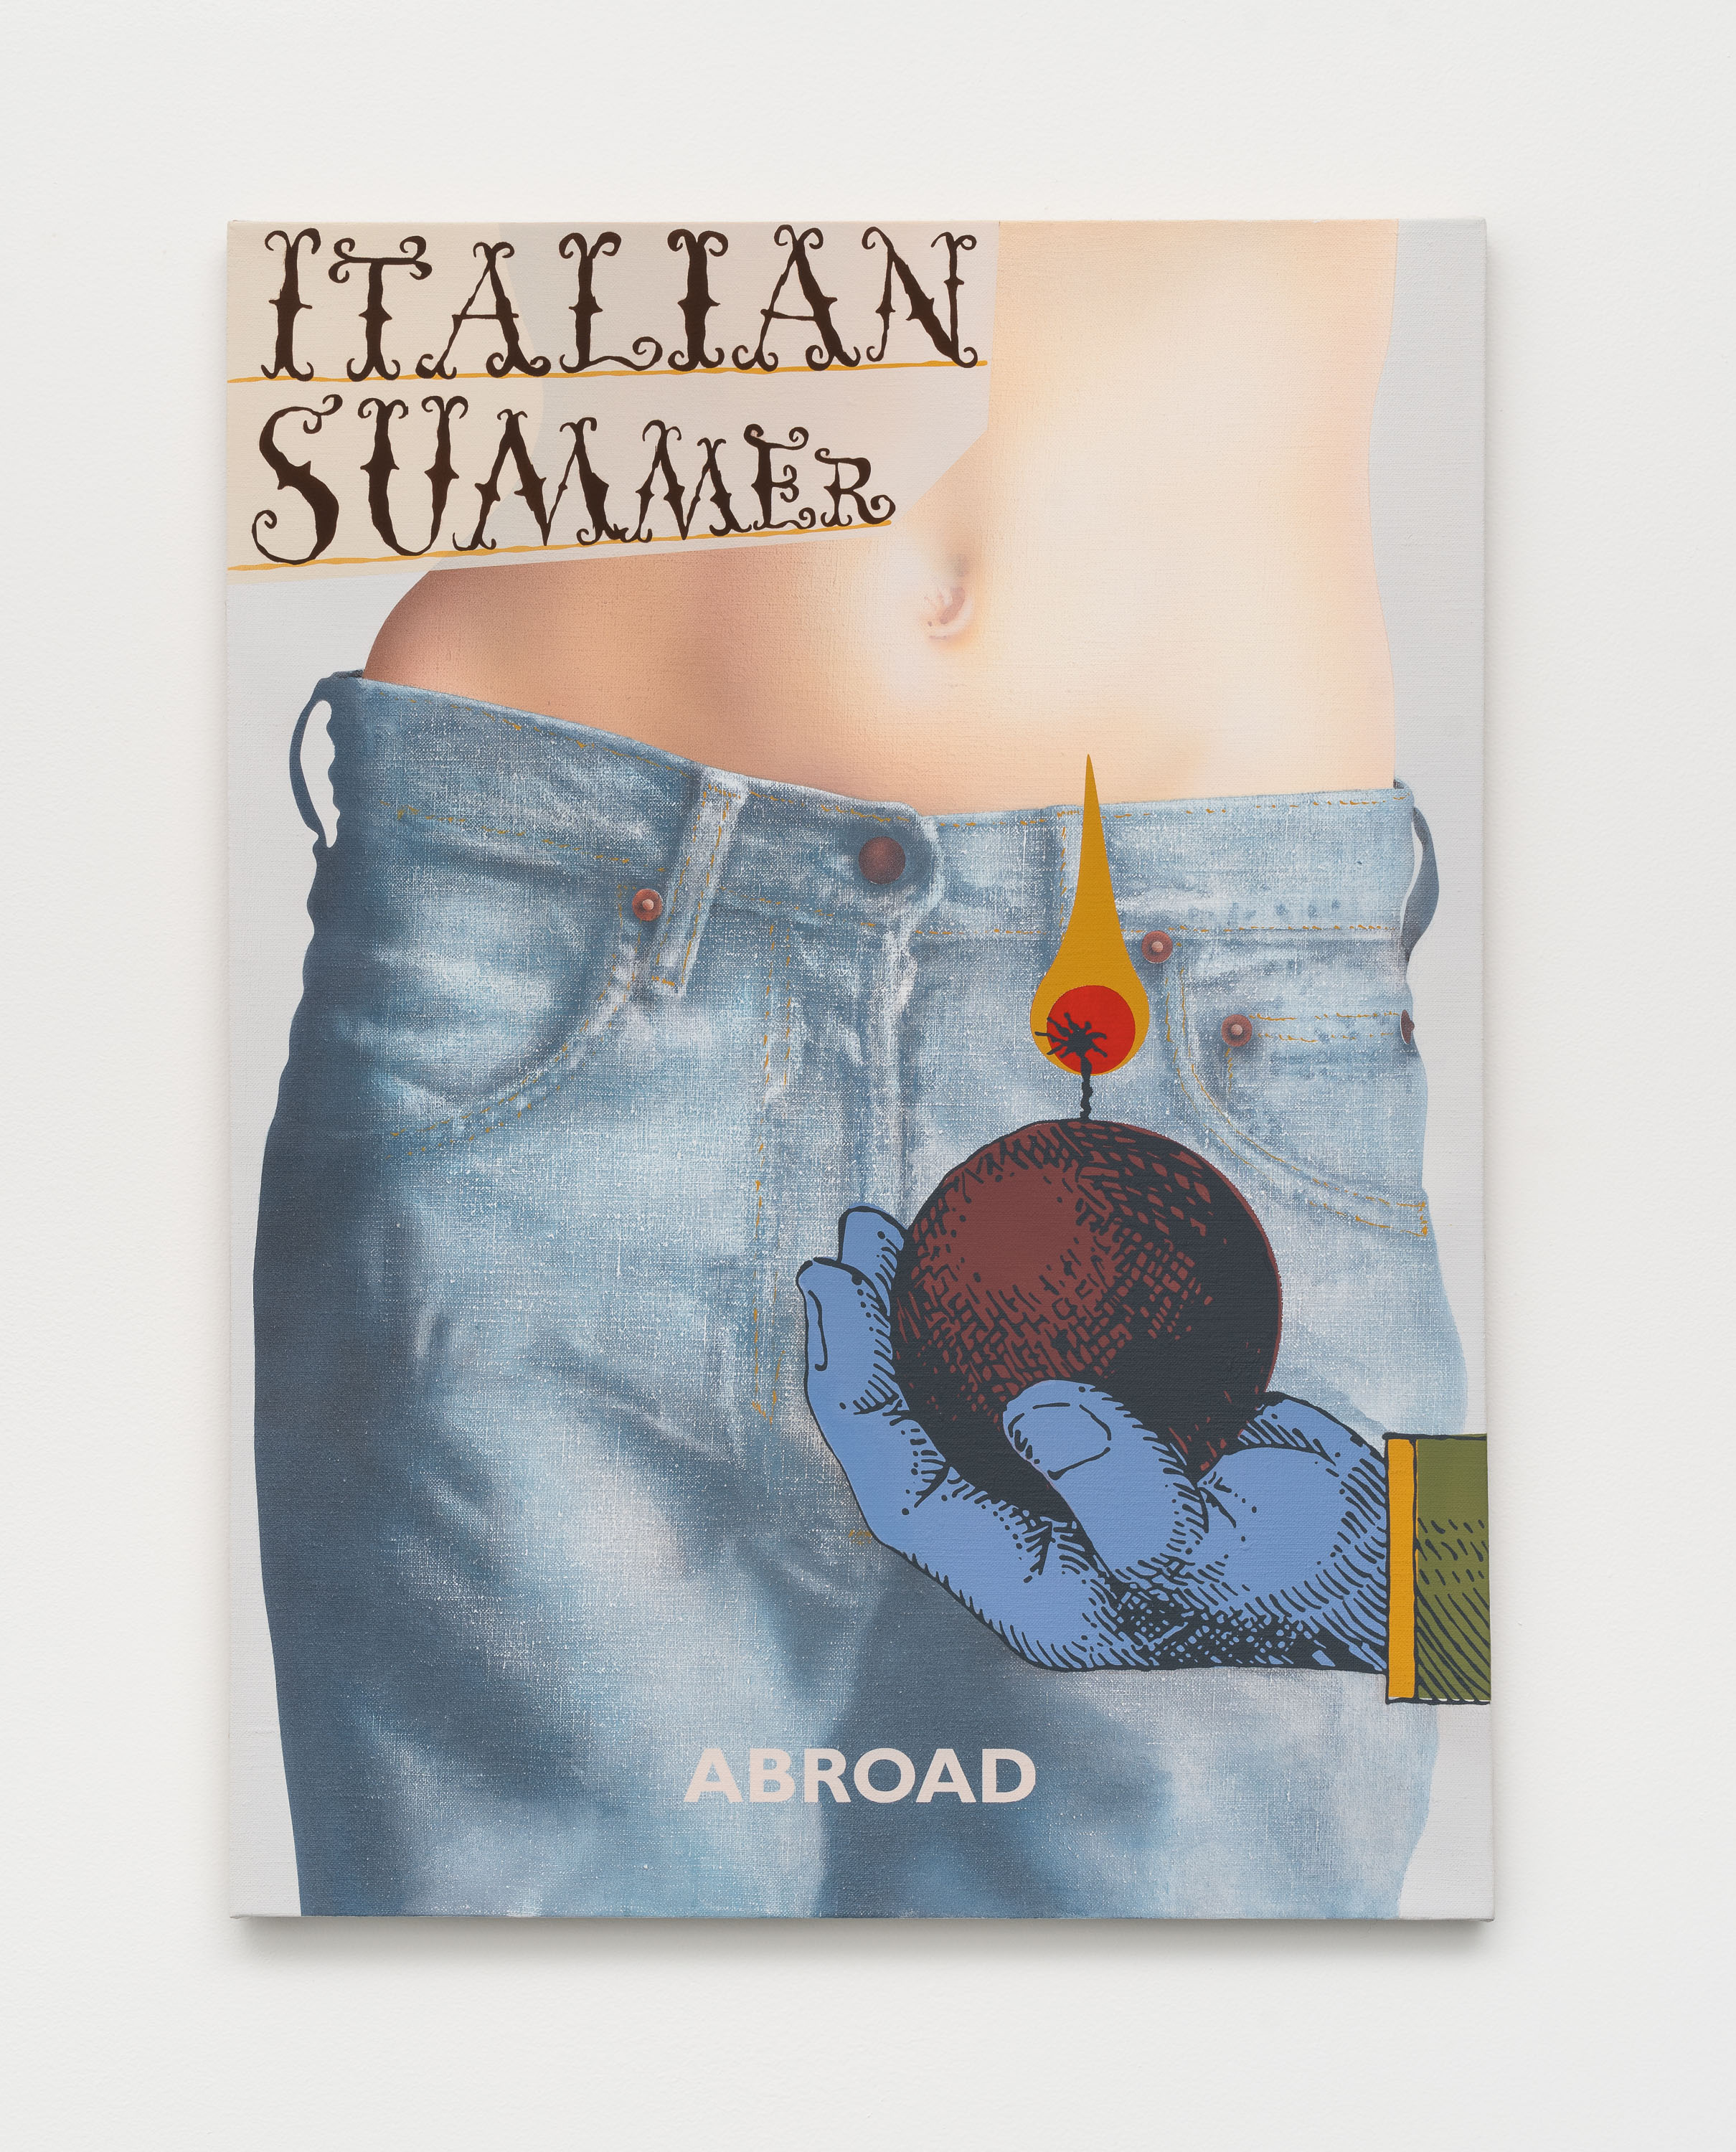 Italian Summer Abroad